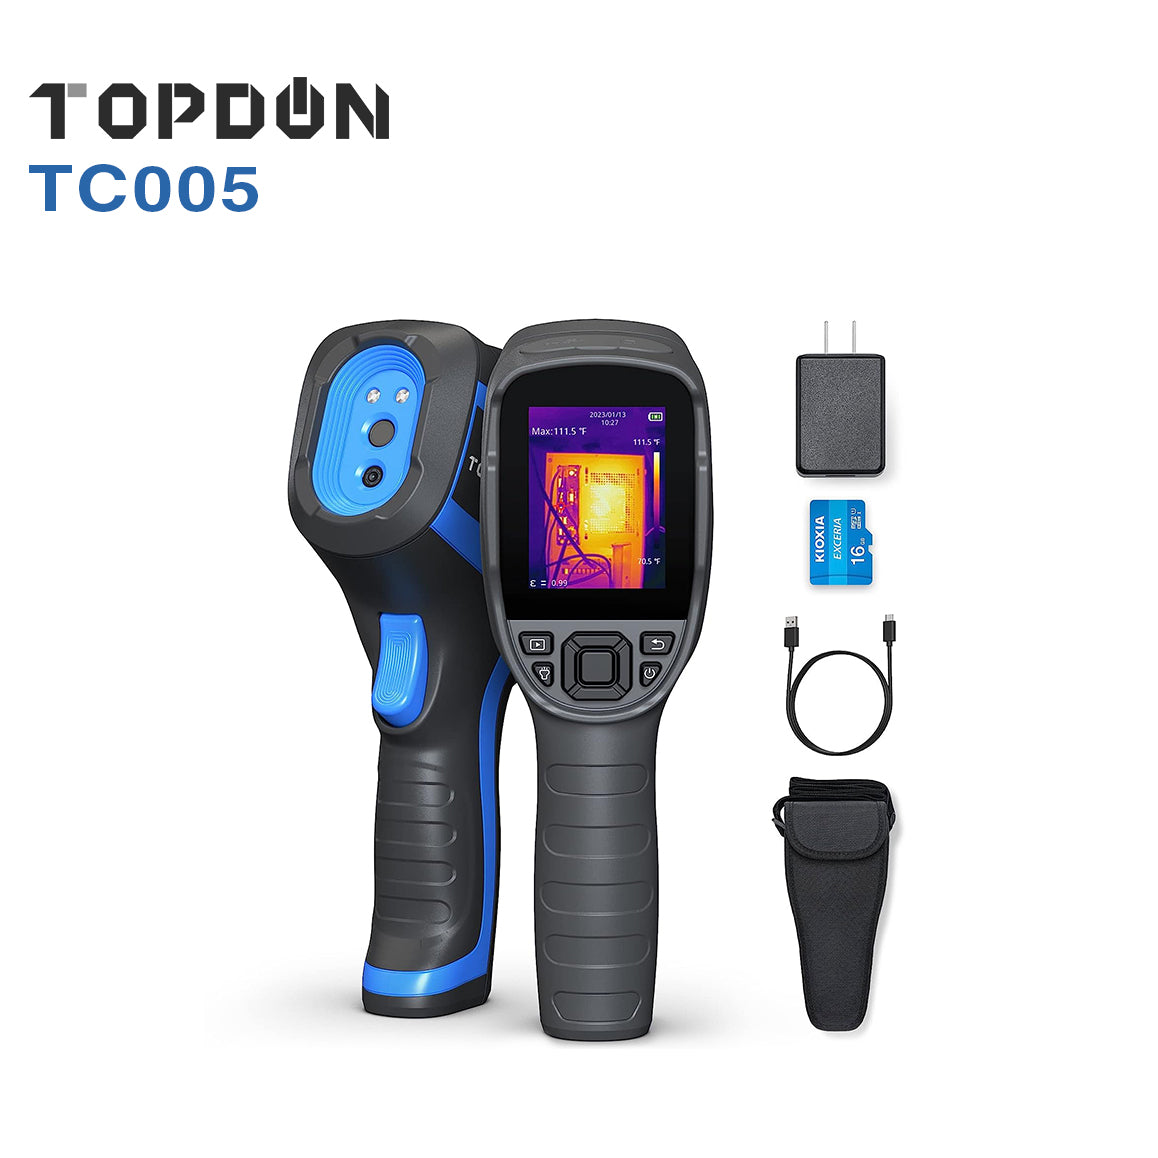 Topdon TC005 Dual-Camera Thermal Imaging Camera Handheld Infrared Thermal Imager Topdon